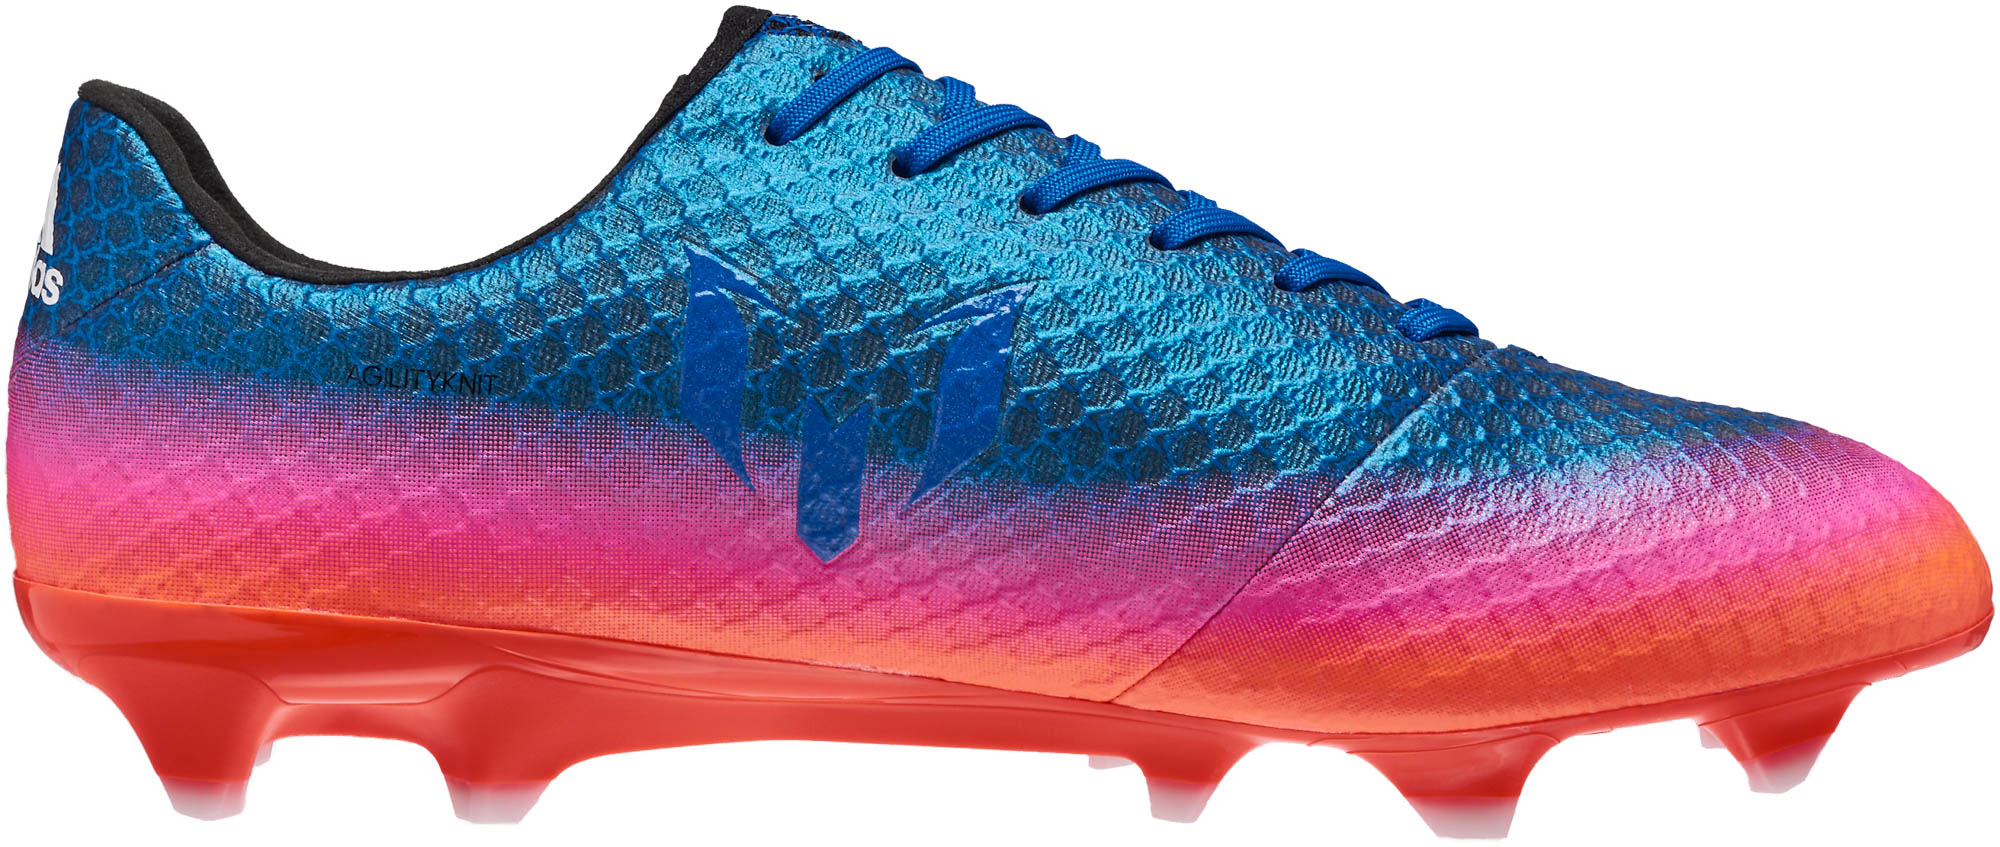 adidas Messi 16.1 FG Soccer Cleats - Blue & Solar Orange - Soccer